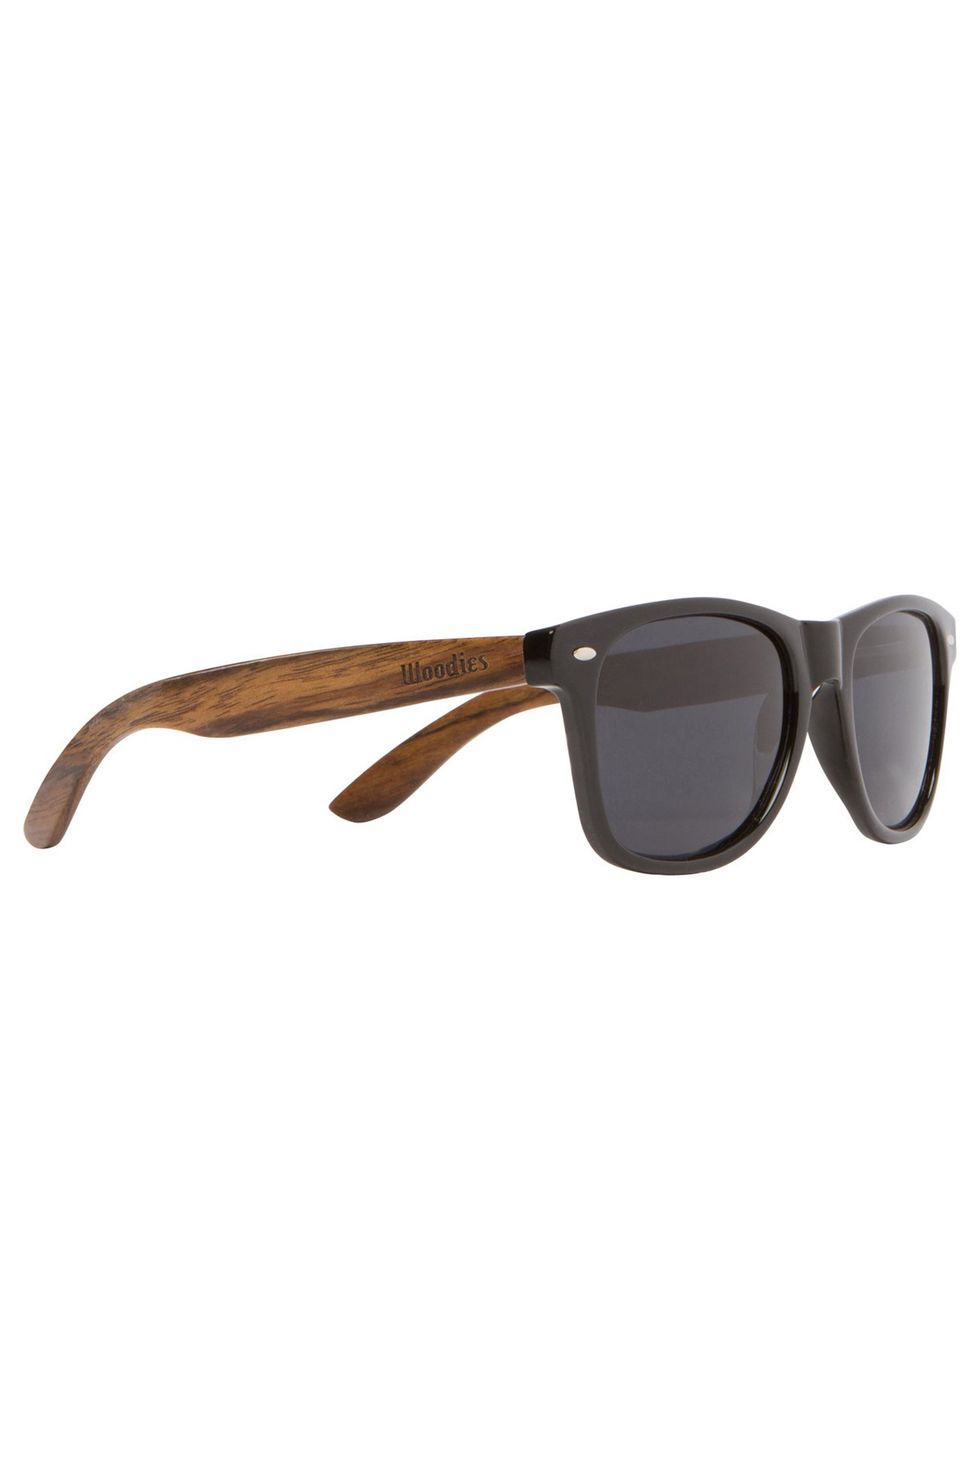 Walnut Wood Sunglasses with Polarized Lens